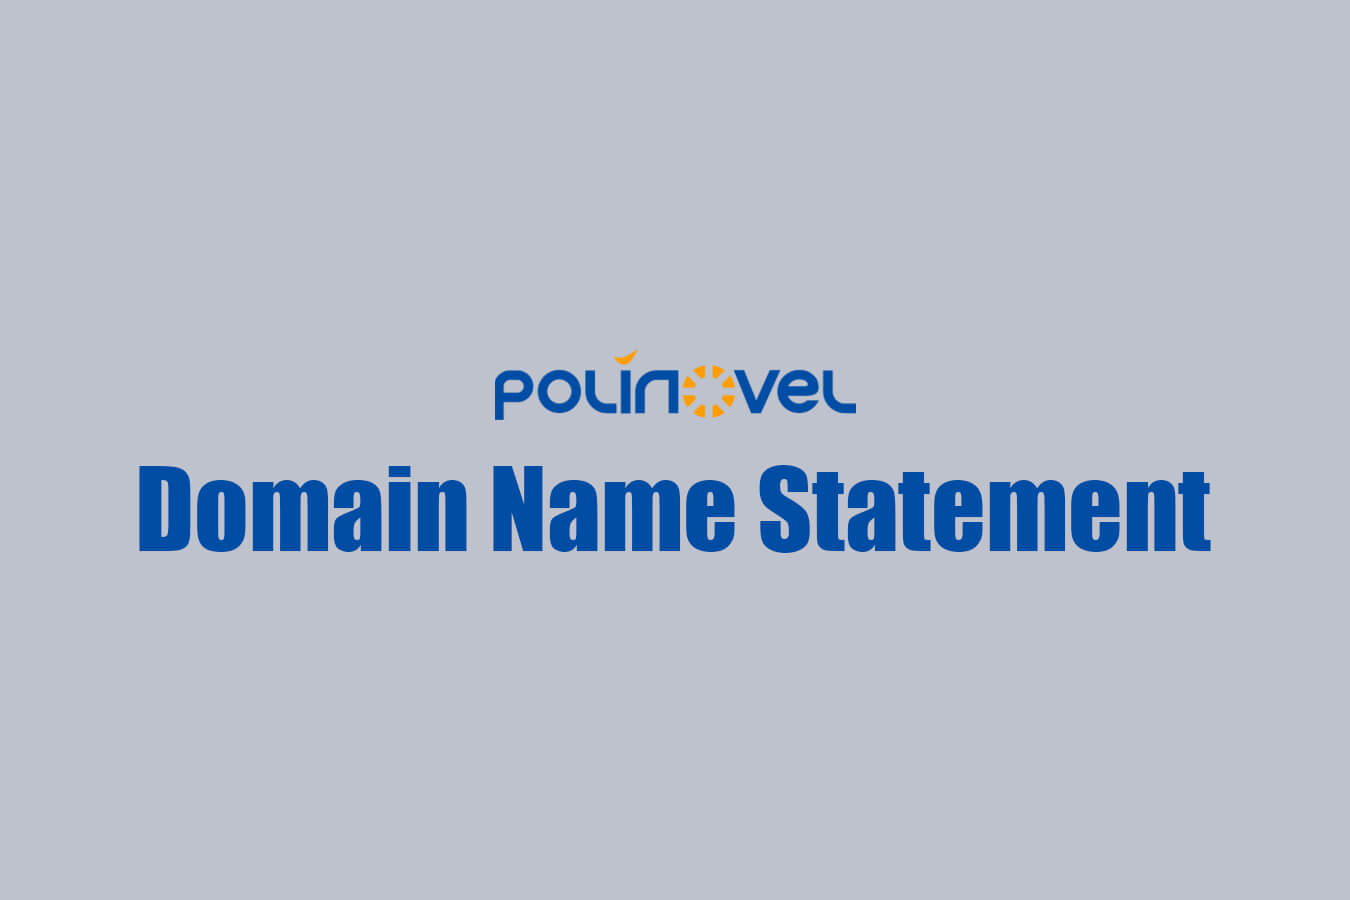 polinovel domain name statement 2